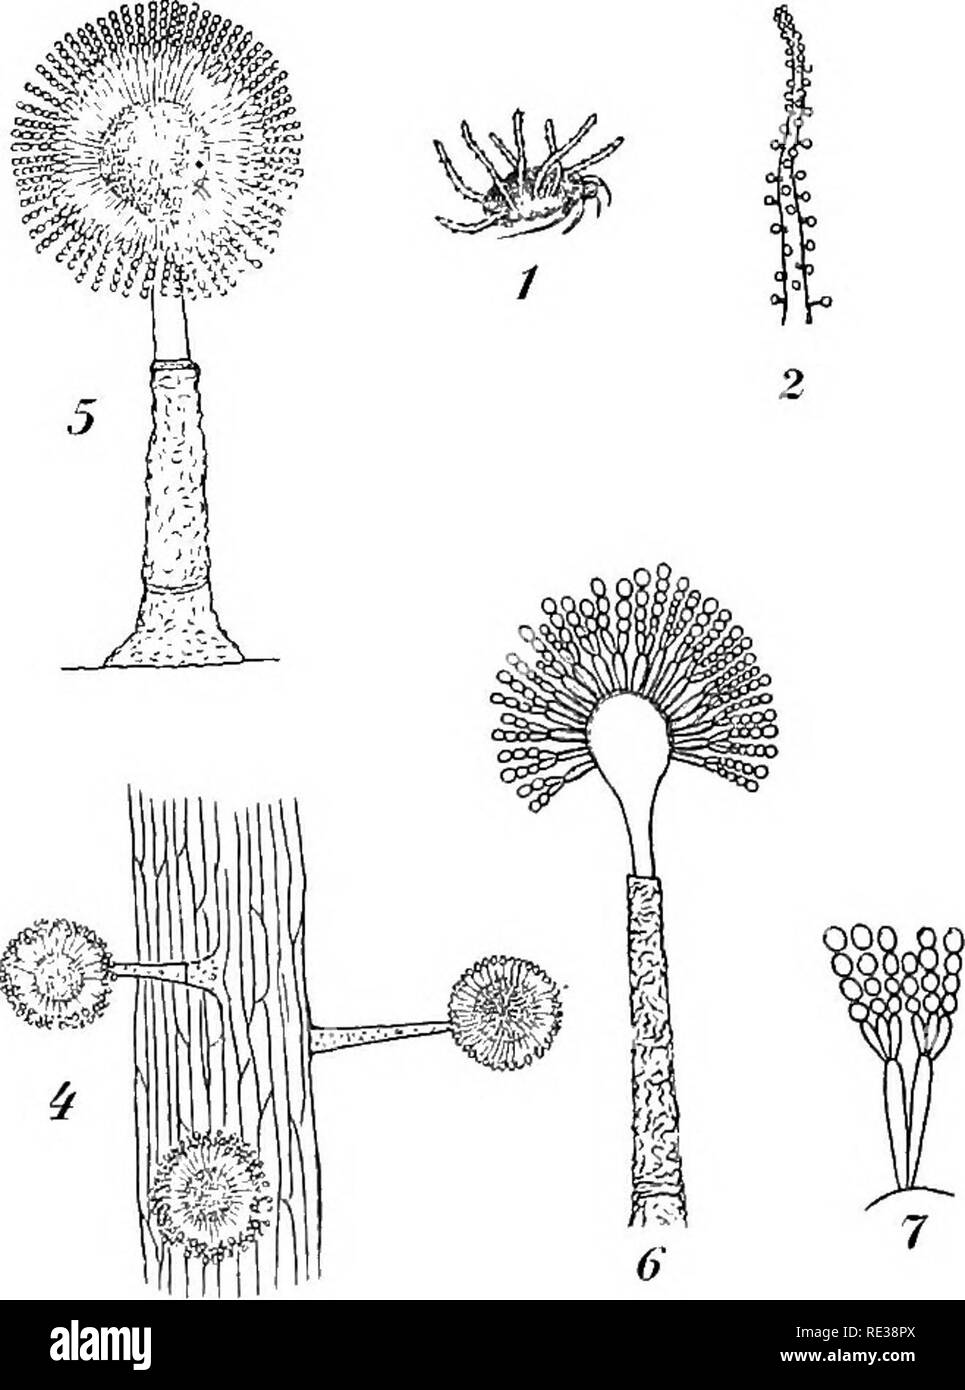 . Danish fungi as represented in the herbarium of E. Rostrup;. Fungi. 538 Stilbella (Syn: Stilbum Tode). 3212. Stilbella Rehmiana (Rbh.) Ldau IX '&quot;', Syn: Stilbum Rehmianum Rbh., Syll. IV =&quot; 6. XÂ«Â«l Is the conidial stage of Dermatea eucrita. On trunks of Pinus sfrobus. J. Silkeborg C^/s 07!). 3213. Stilbella turbinata (Fries) Ldau IX'''&quot;, Syn: Stilbum turb. Tode, Fries S. M. IIP''^ Syll. IV &quot;^ On stems of Cactaceae. S. Botanisk Have. June 88. 3214. Stilbella fimetaria (Fries) Lindau IX ^'&gt; Syn: Peziza fim. Fries S. M. IP&quot;, Stilbum fim. (Pers.) Berk. &amp; Br., Sy Stock Photo